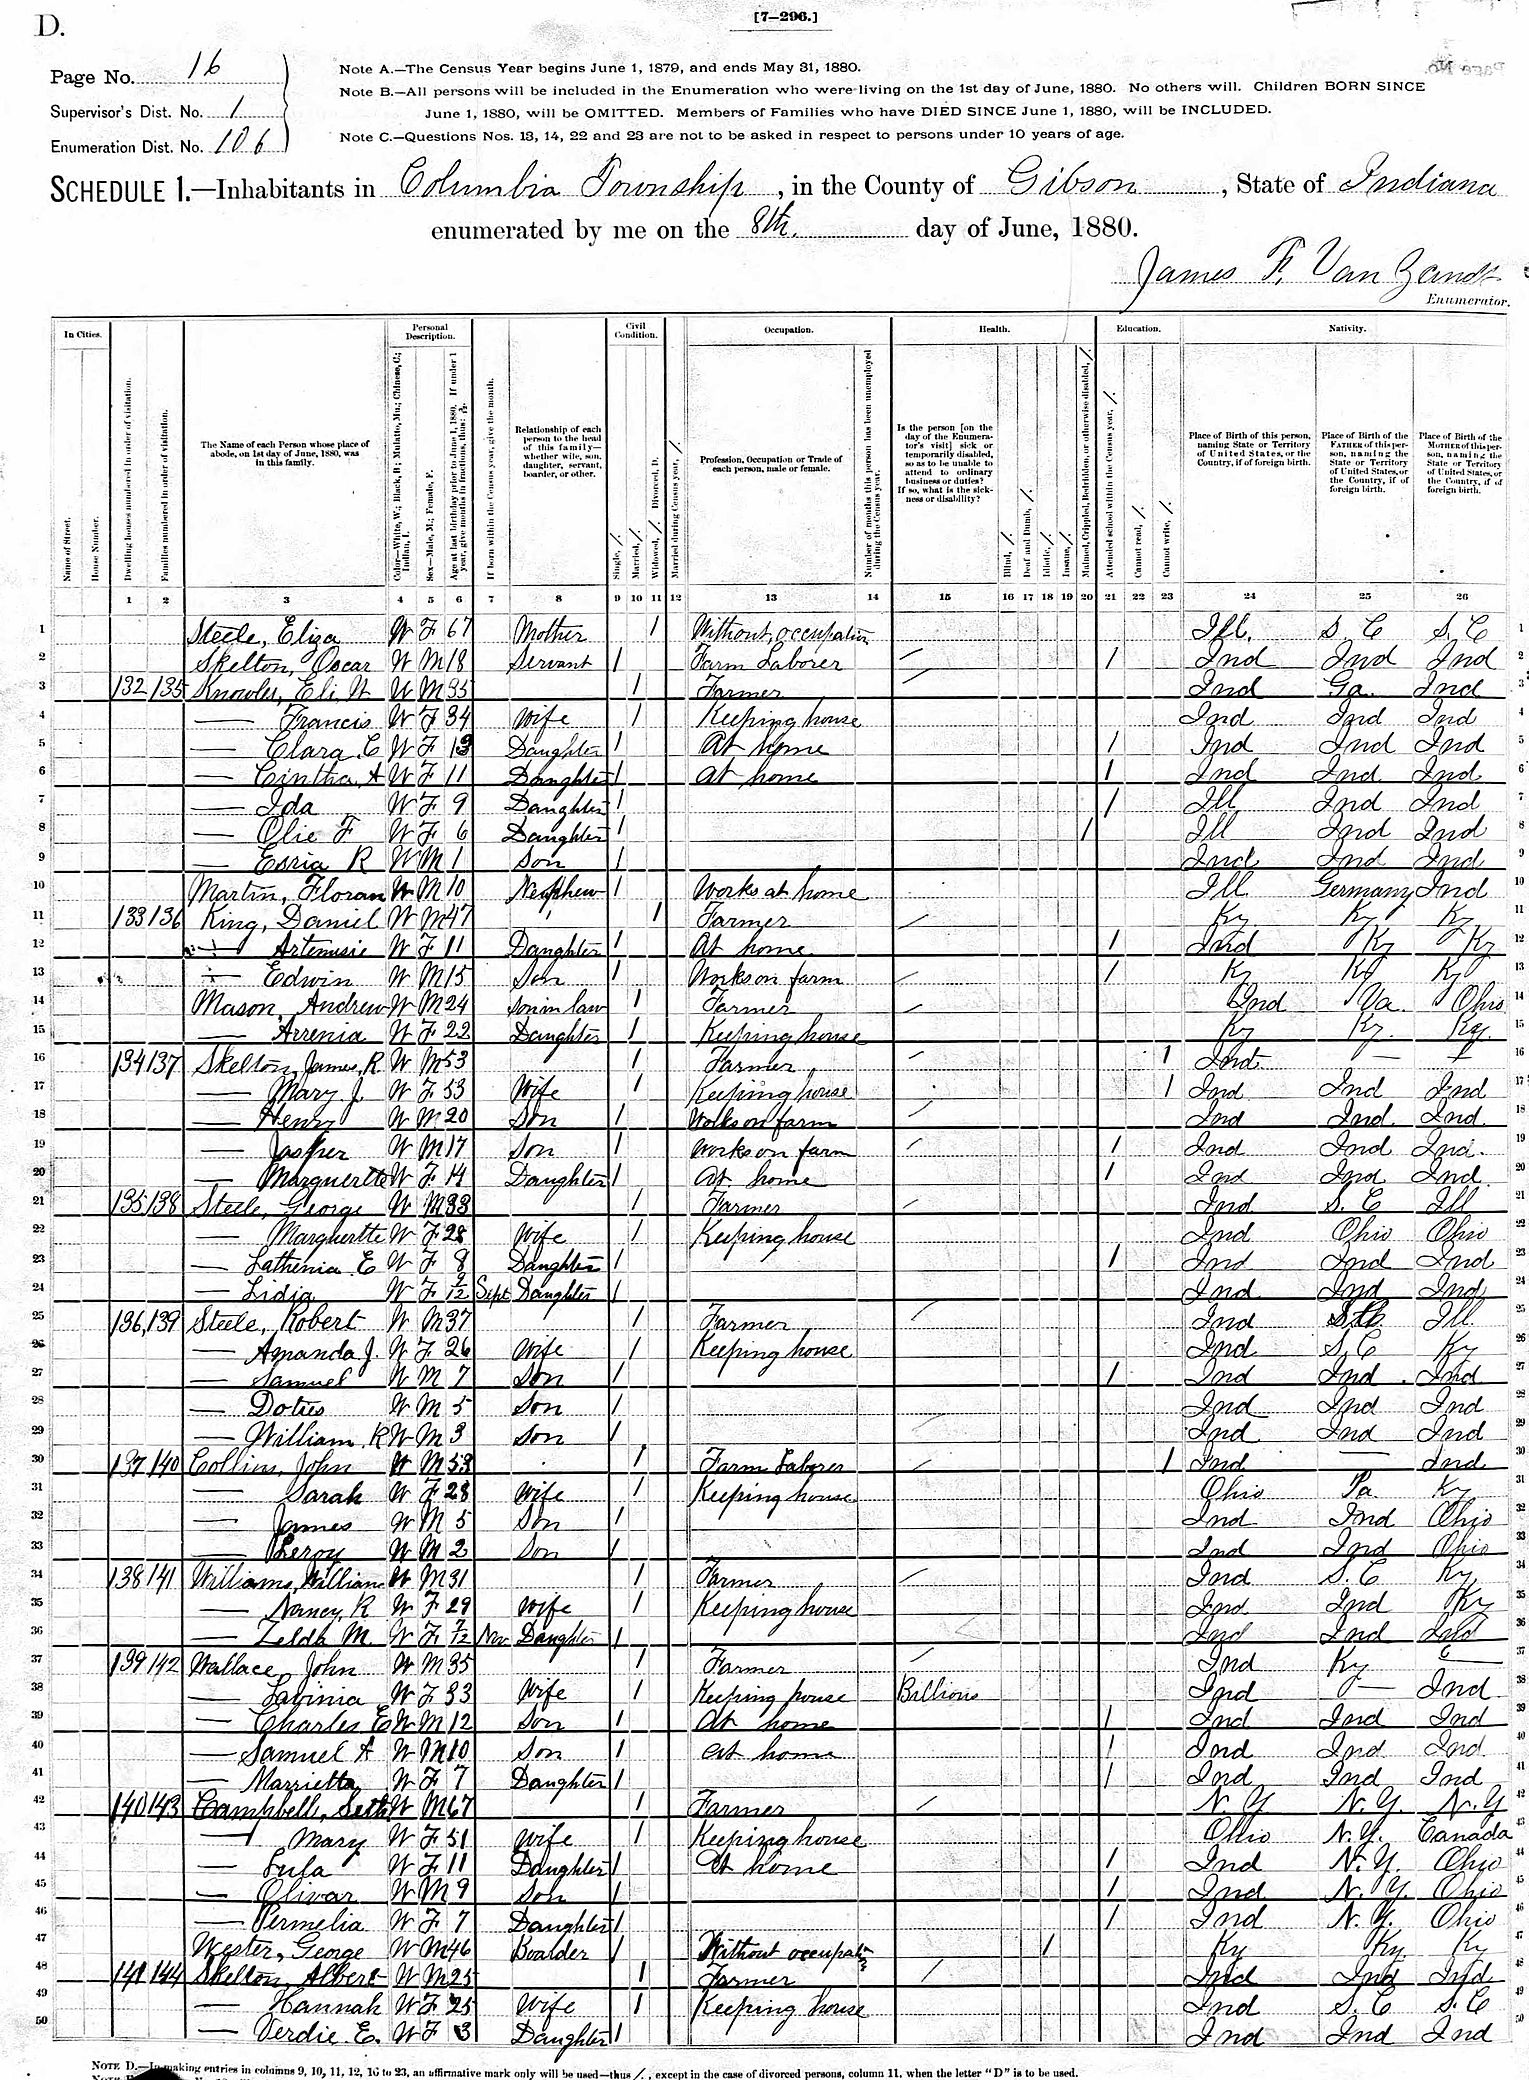 Skelton, James R - 1880 Census